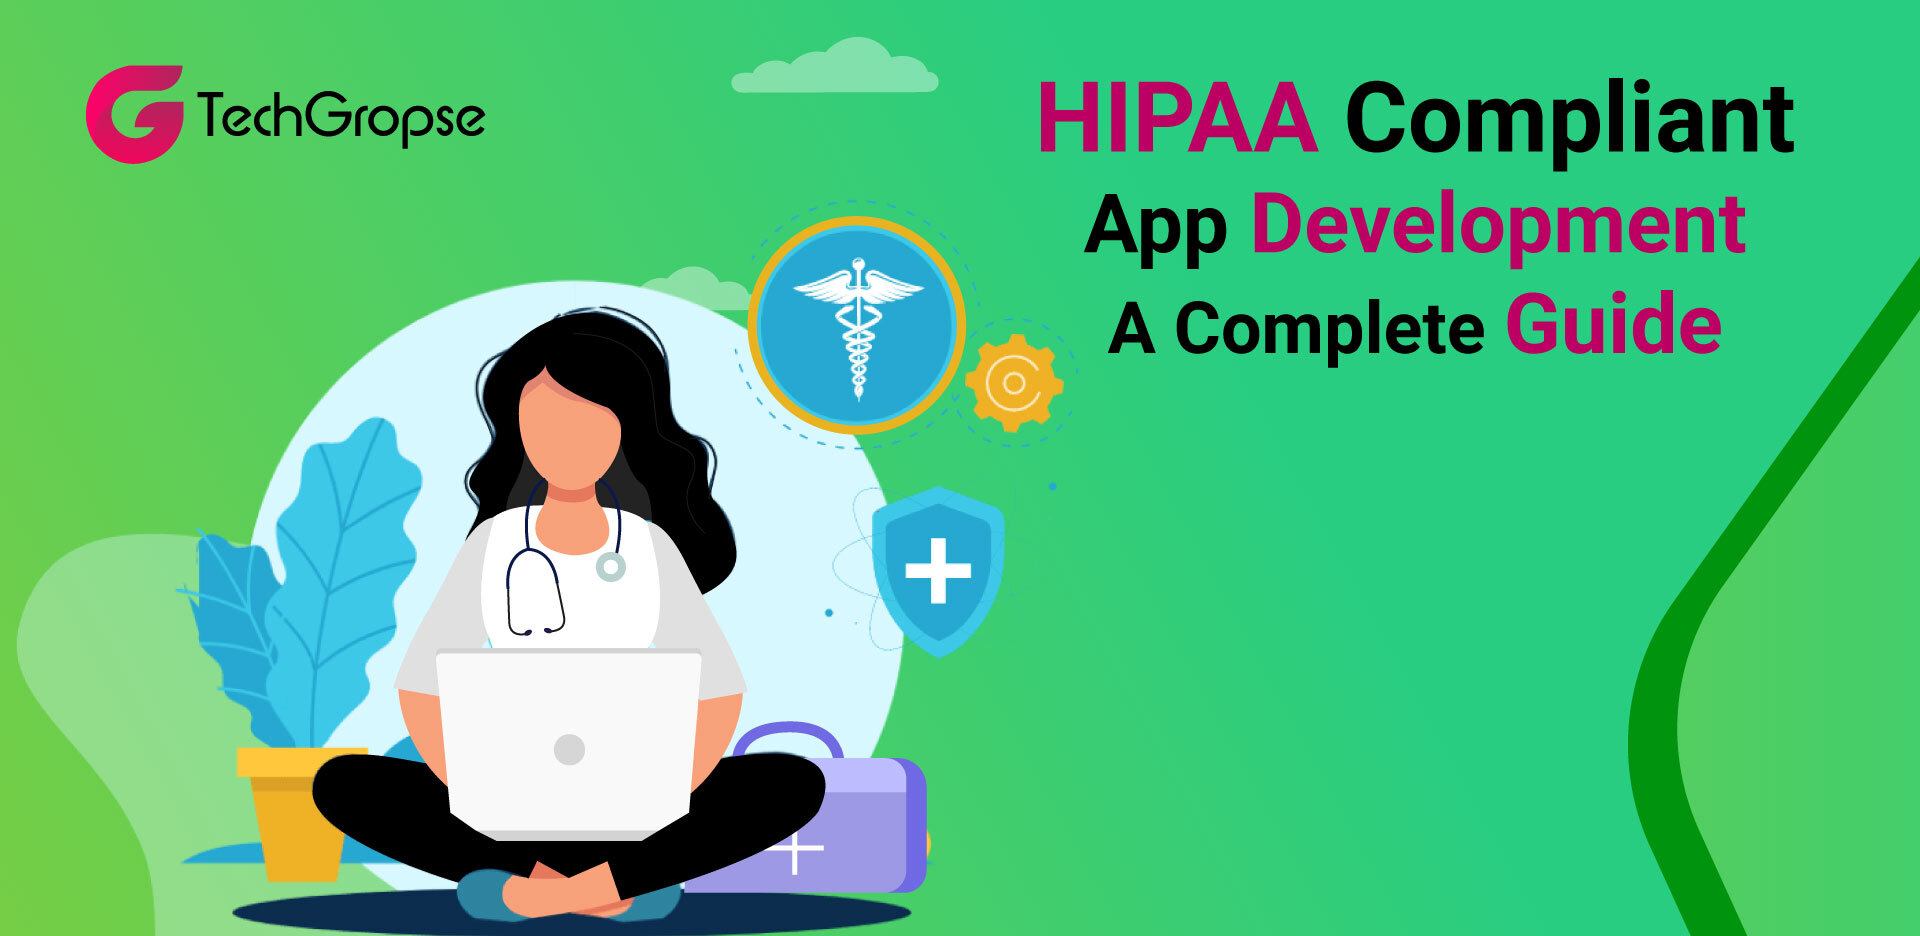 HiPAA Compliant App Development